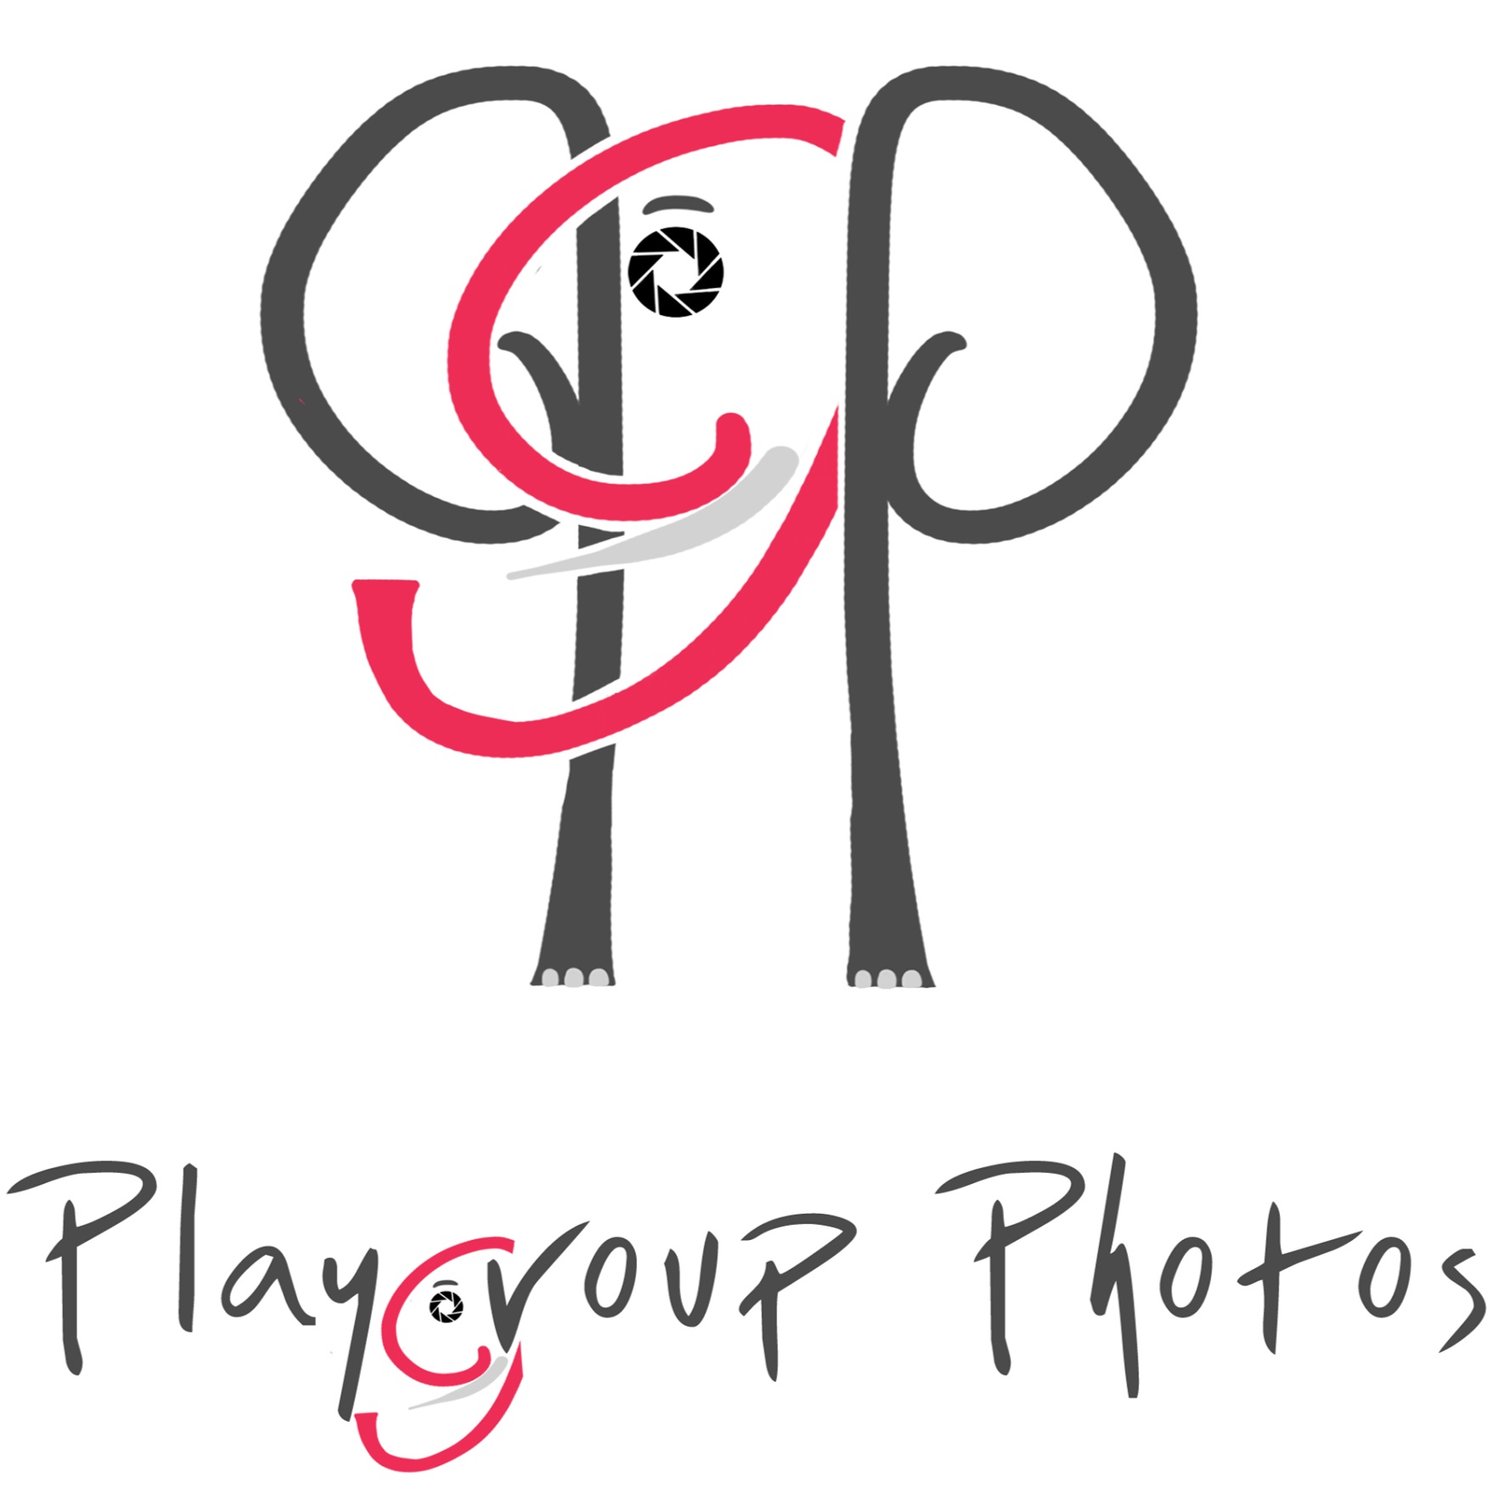 Playgroup Photos